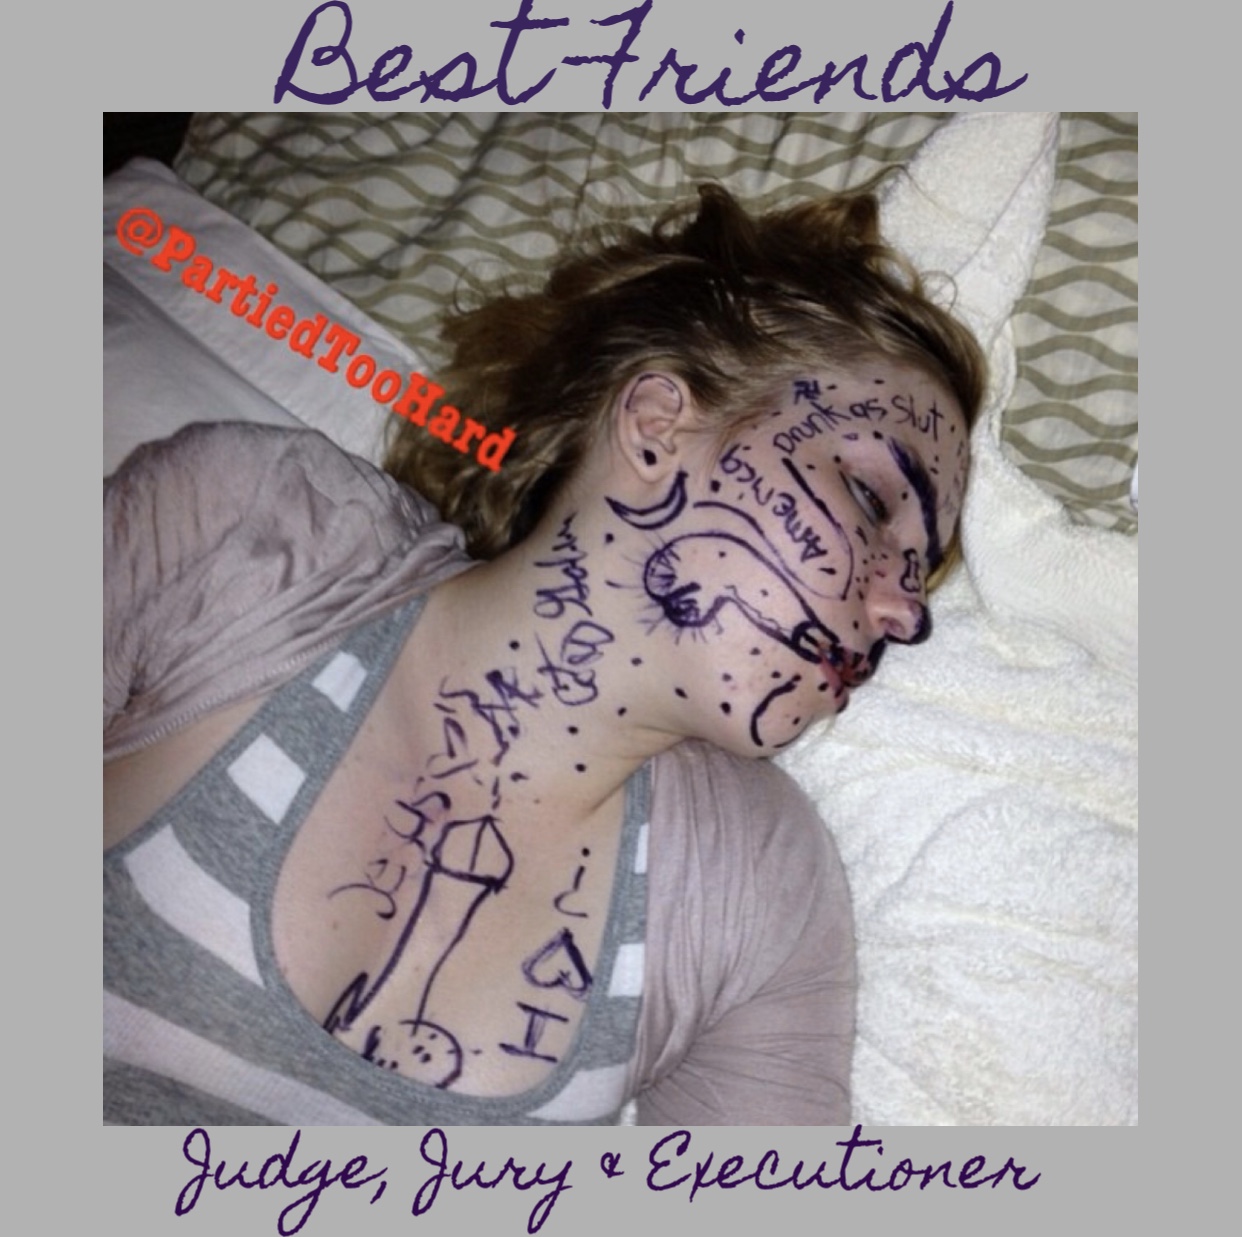 temporary tattoo - Best Friends Partied Too lard Wowowy Un Amenca Joh Judge, Jury e Executioner